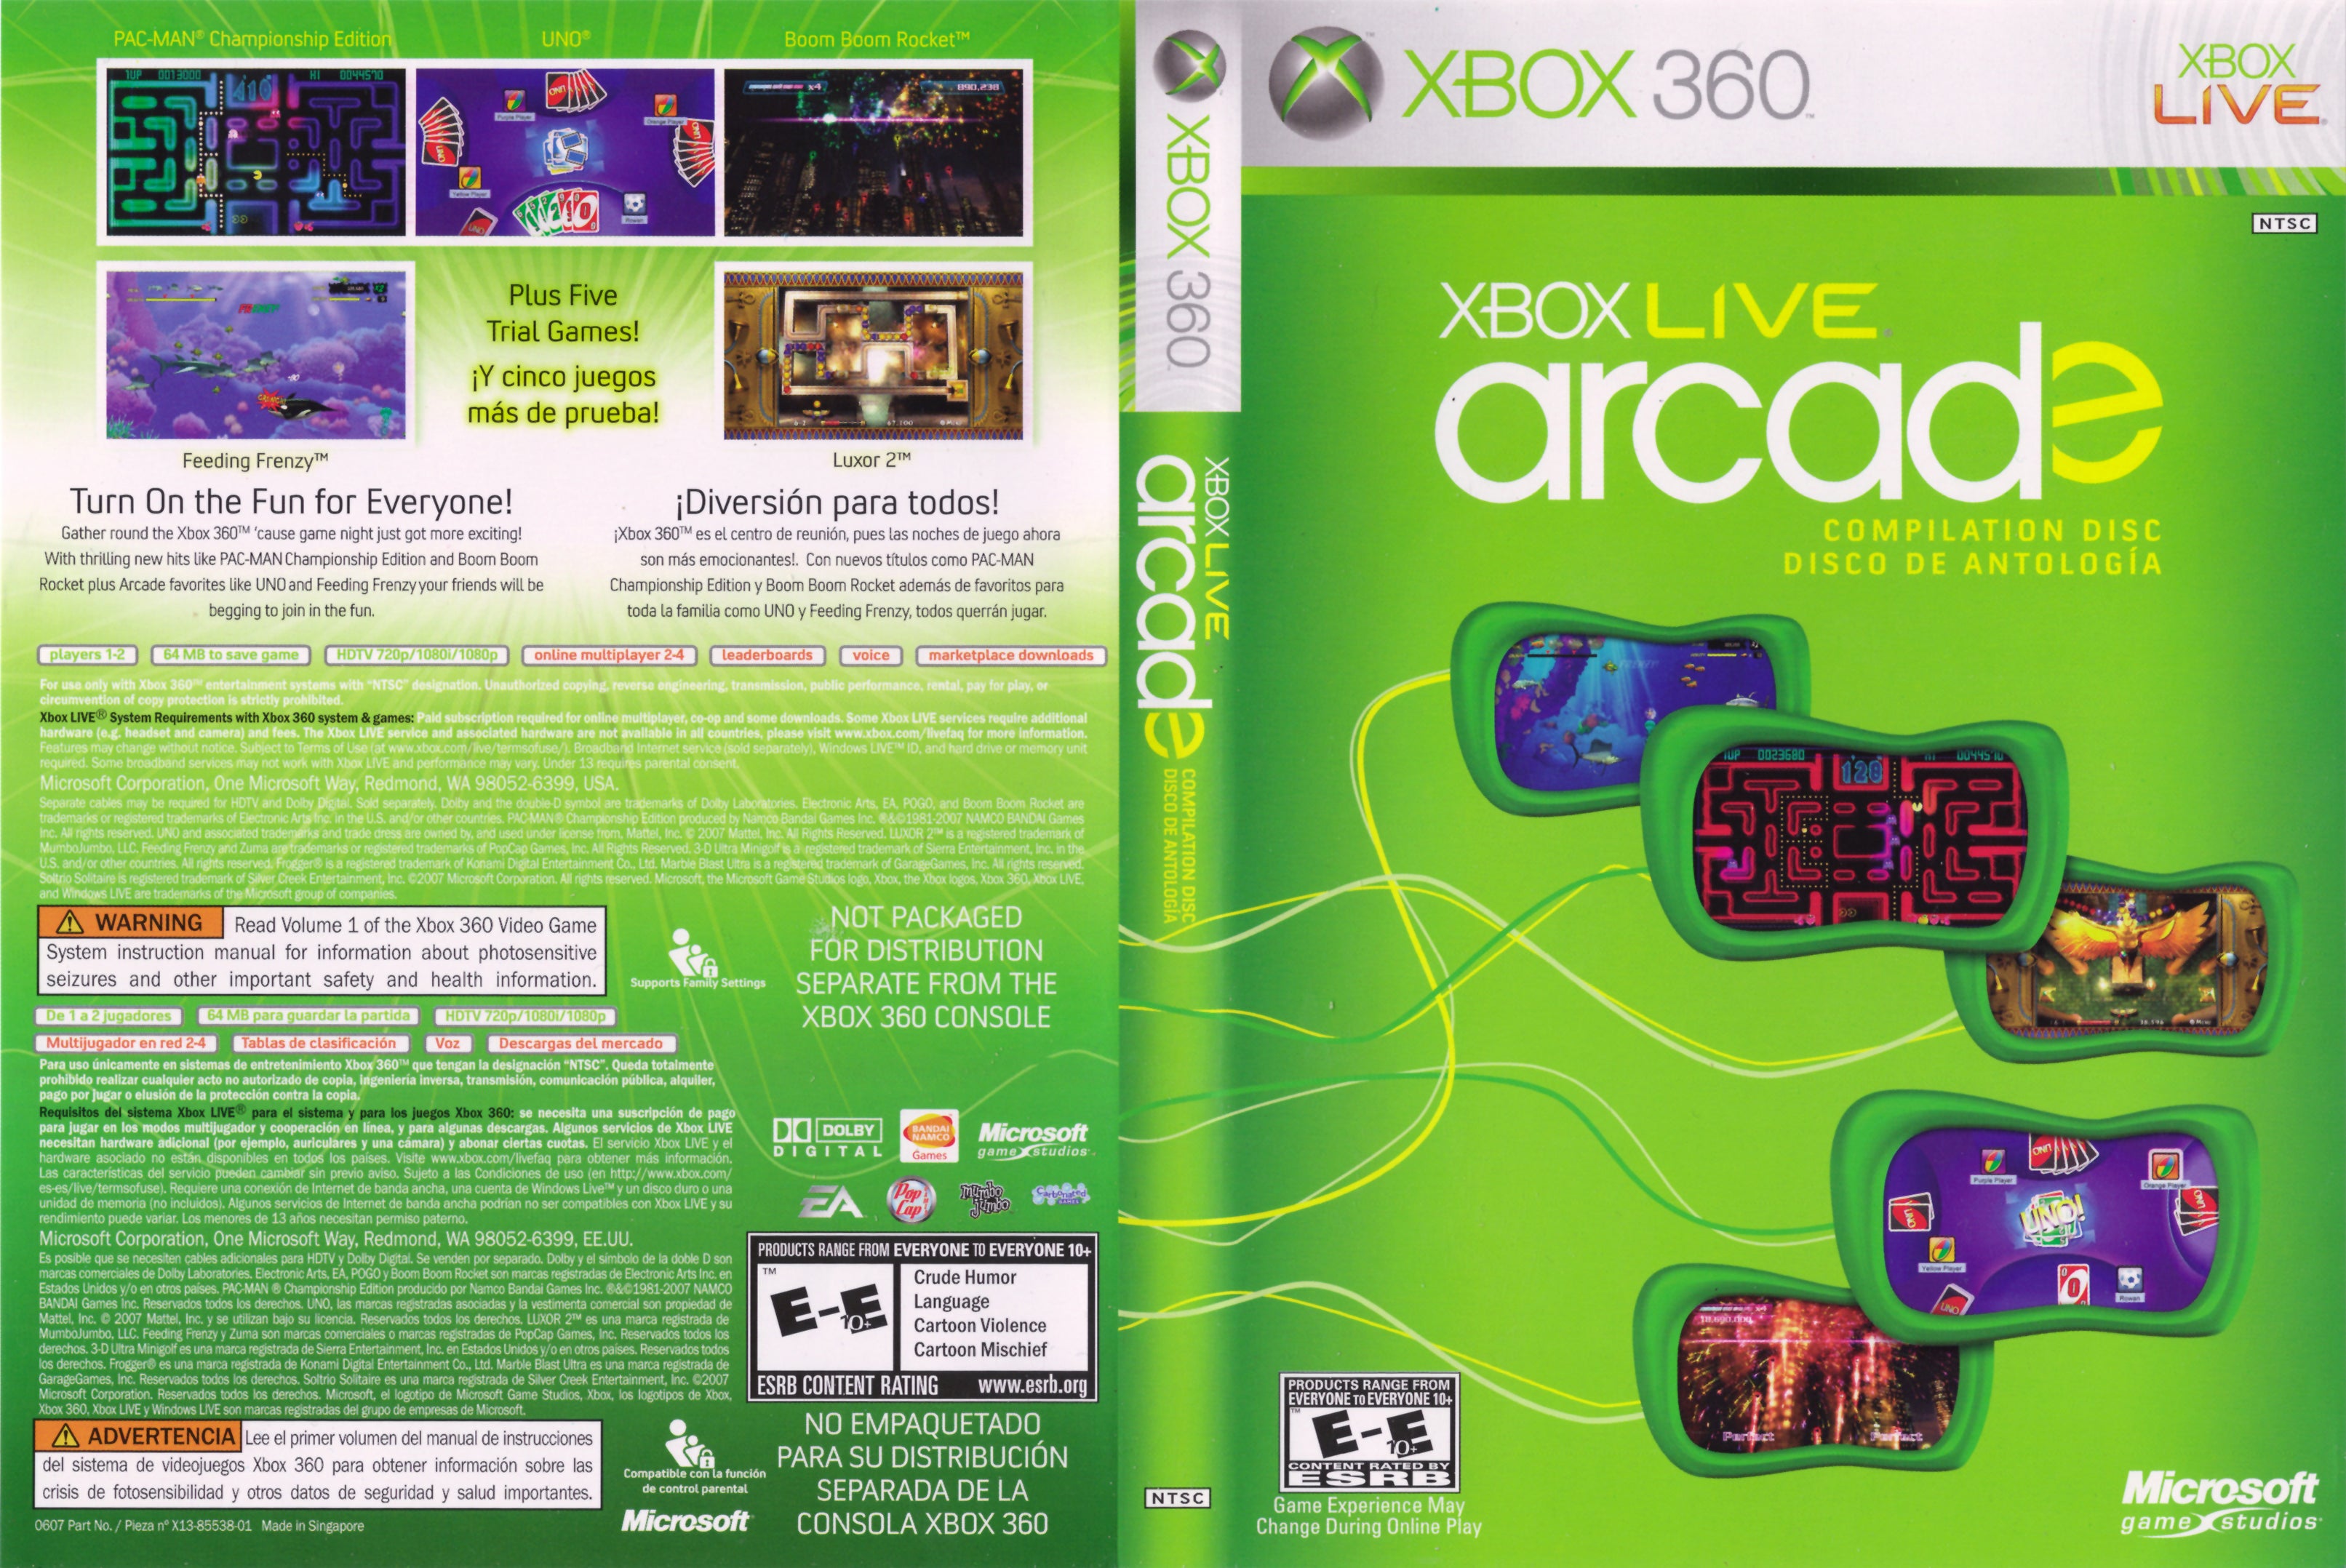 360 e игры. Xbox Live Xbox 360. Xbox Arcade 360 игры диск. Xbox 360 Arcade. Xbox Live Arcade Compilation Disc для Xbox 360.